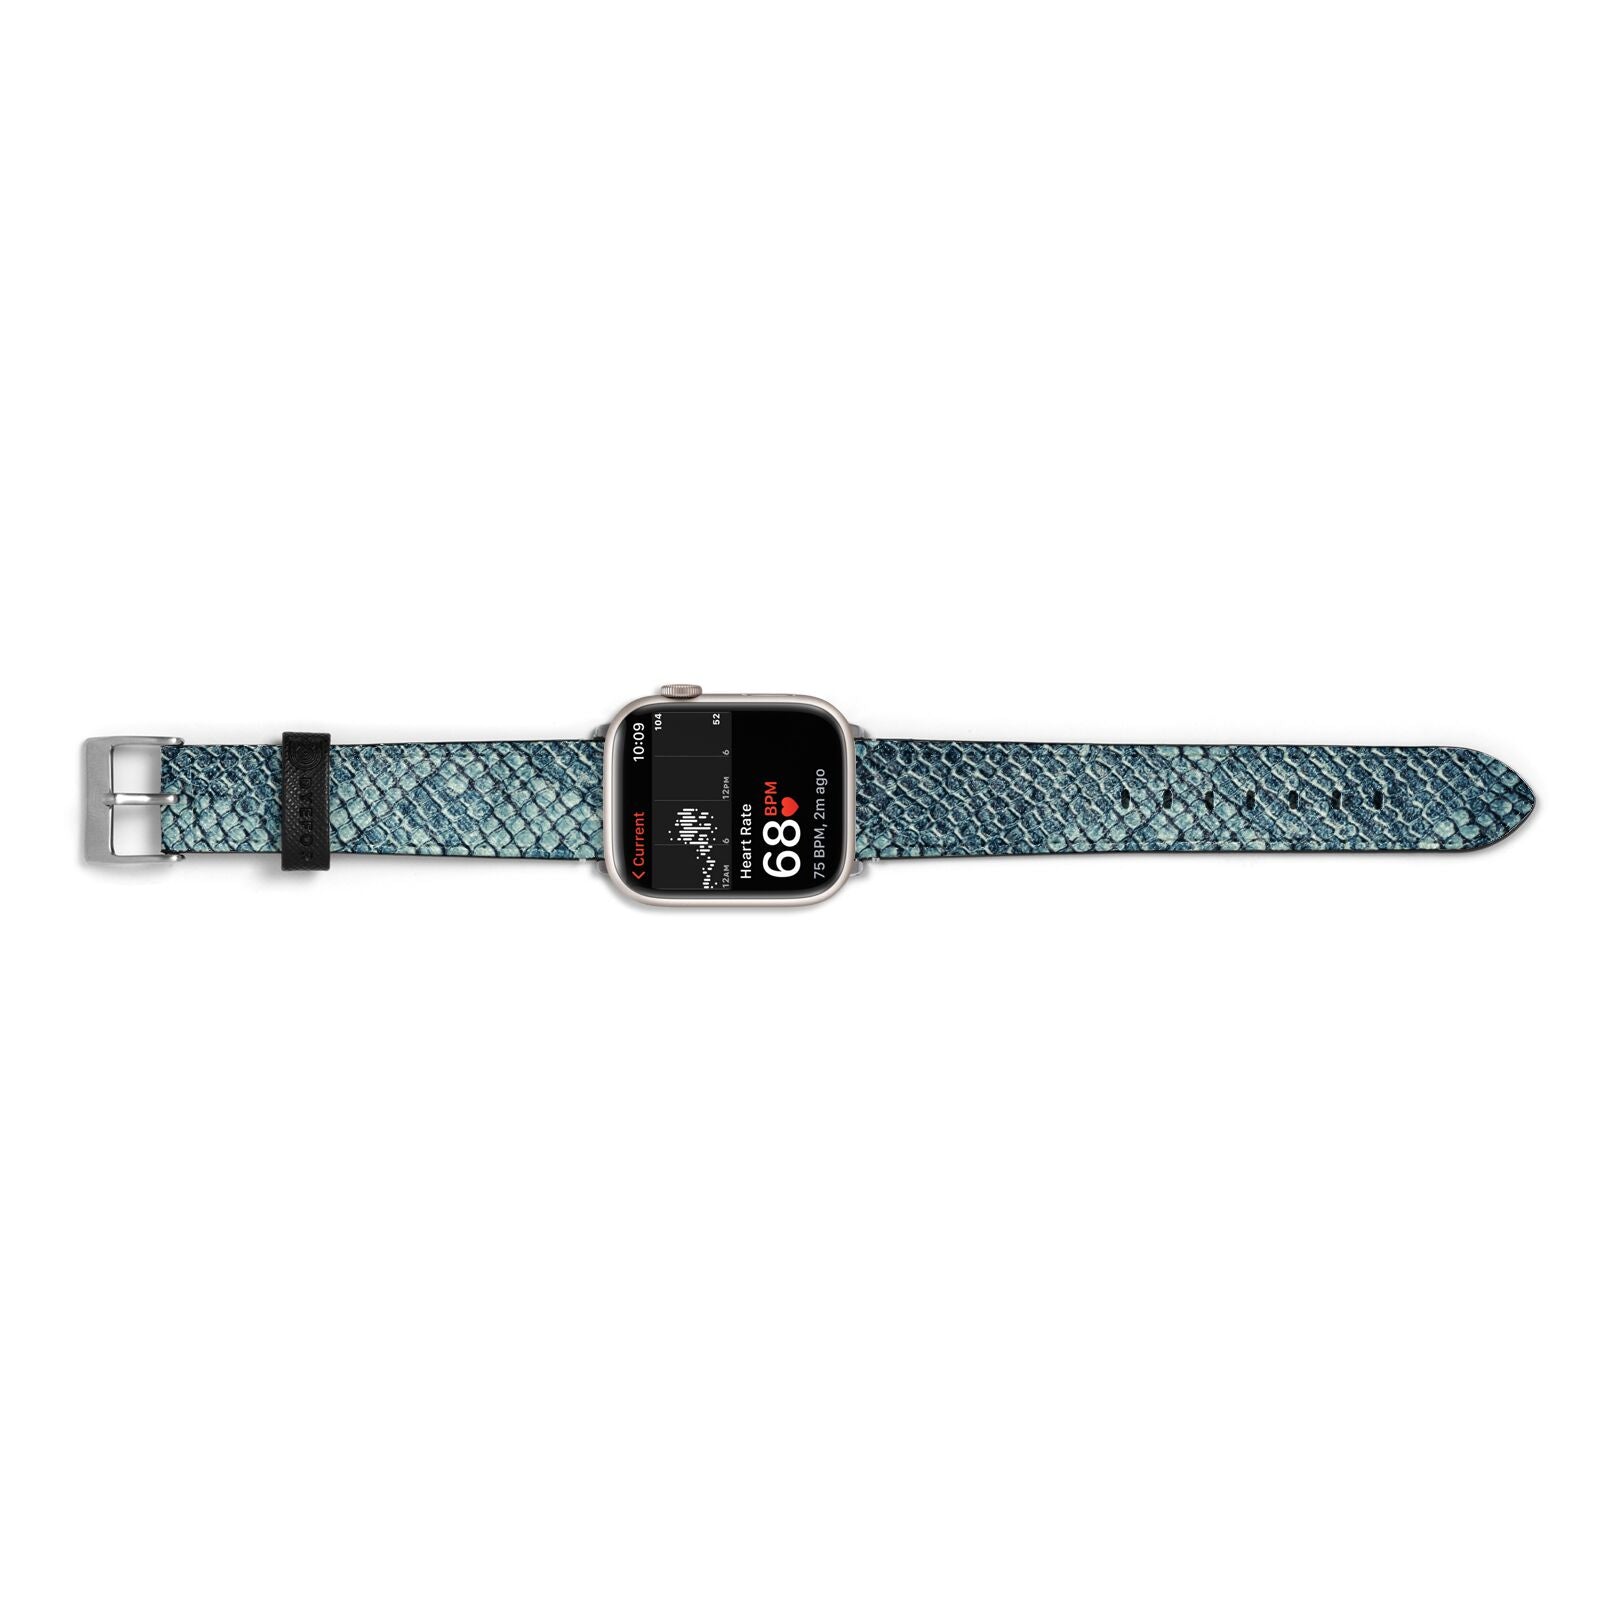 Teal Snakeskin Apple Watch Strap Size 38mm Landscape Image Silver Hardware